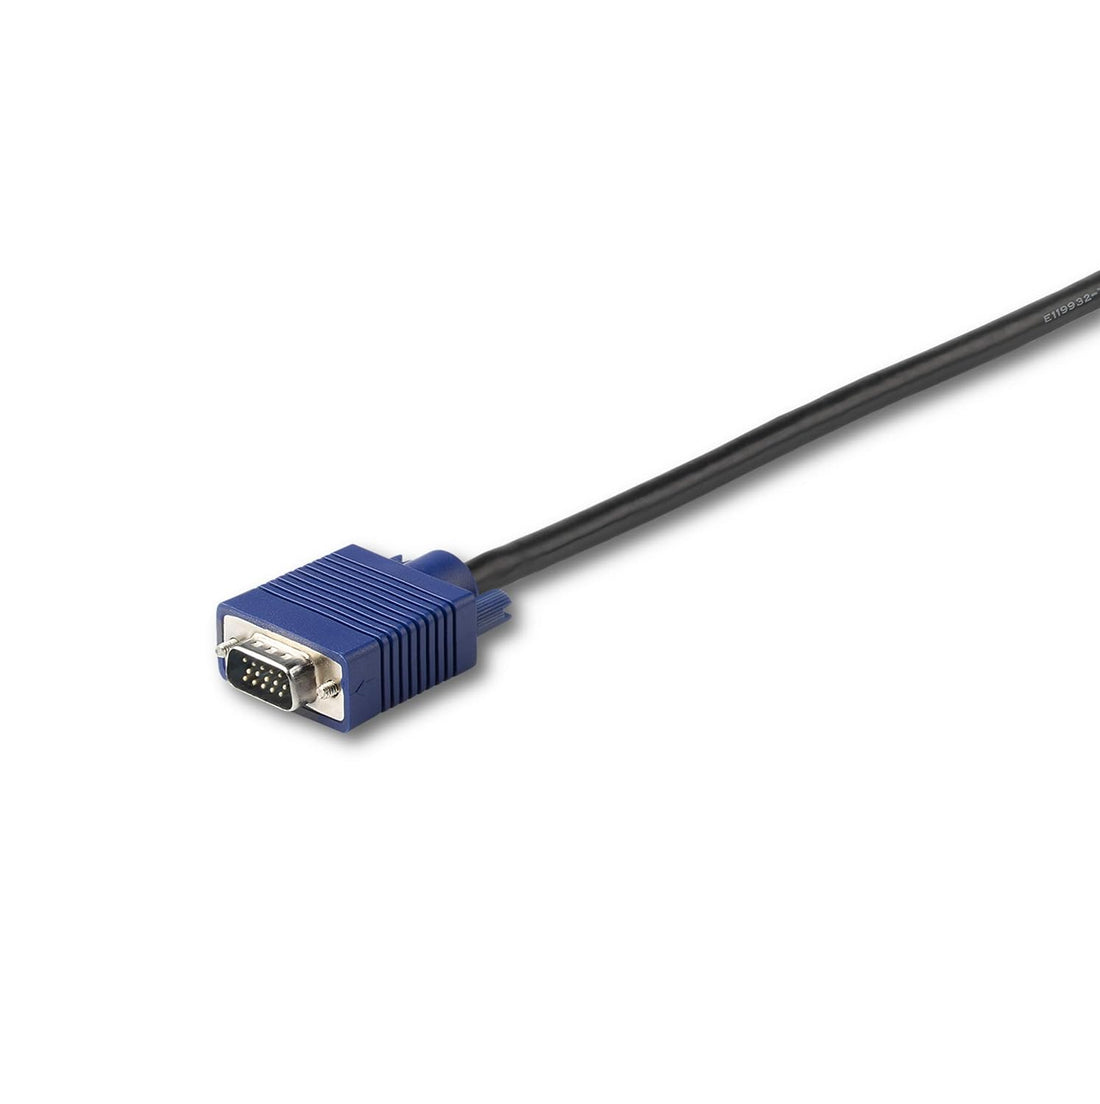 10 ft. (3 m) USB KVM Cable for StarTech.com Rackmount Consoles - VGA and USB KVM Console Cable (RKCONSUV10)